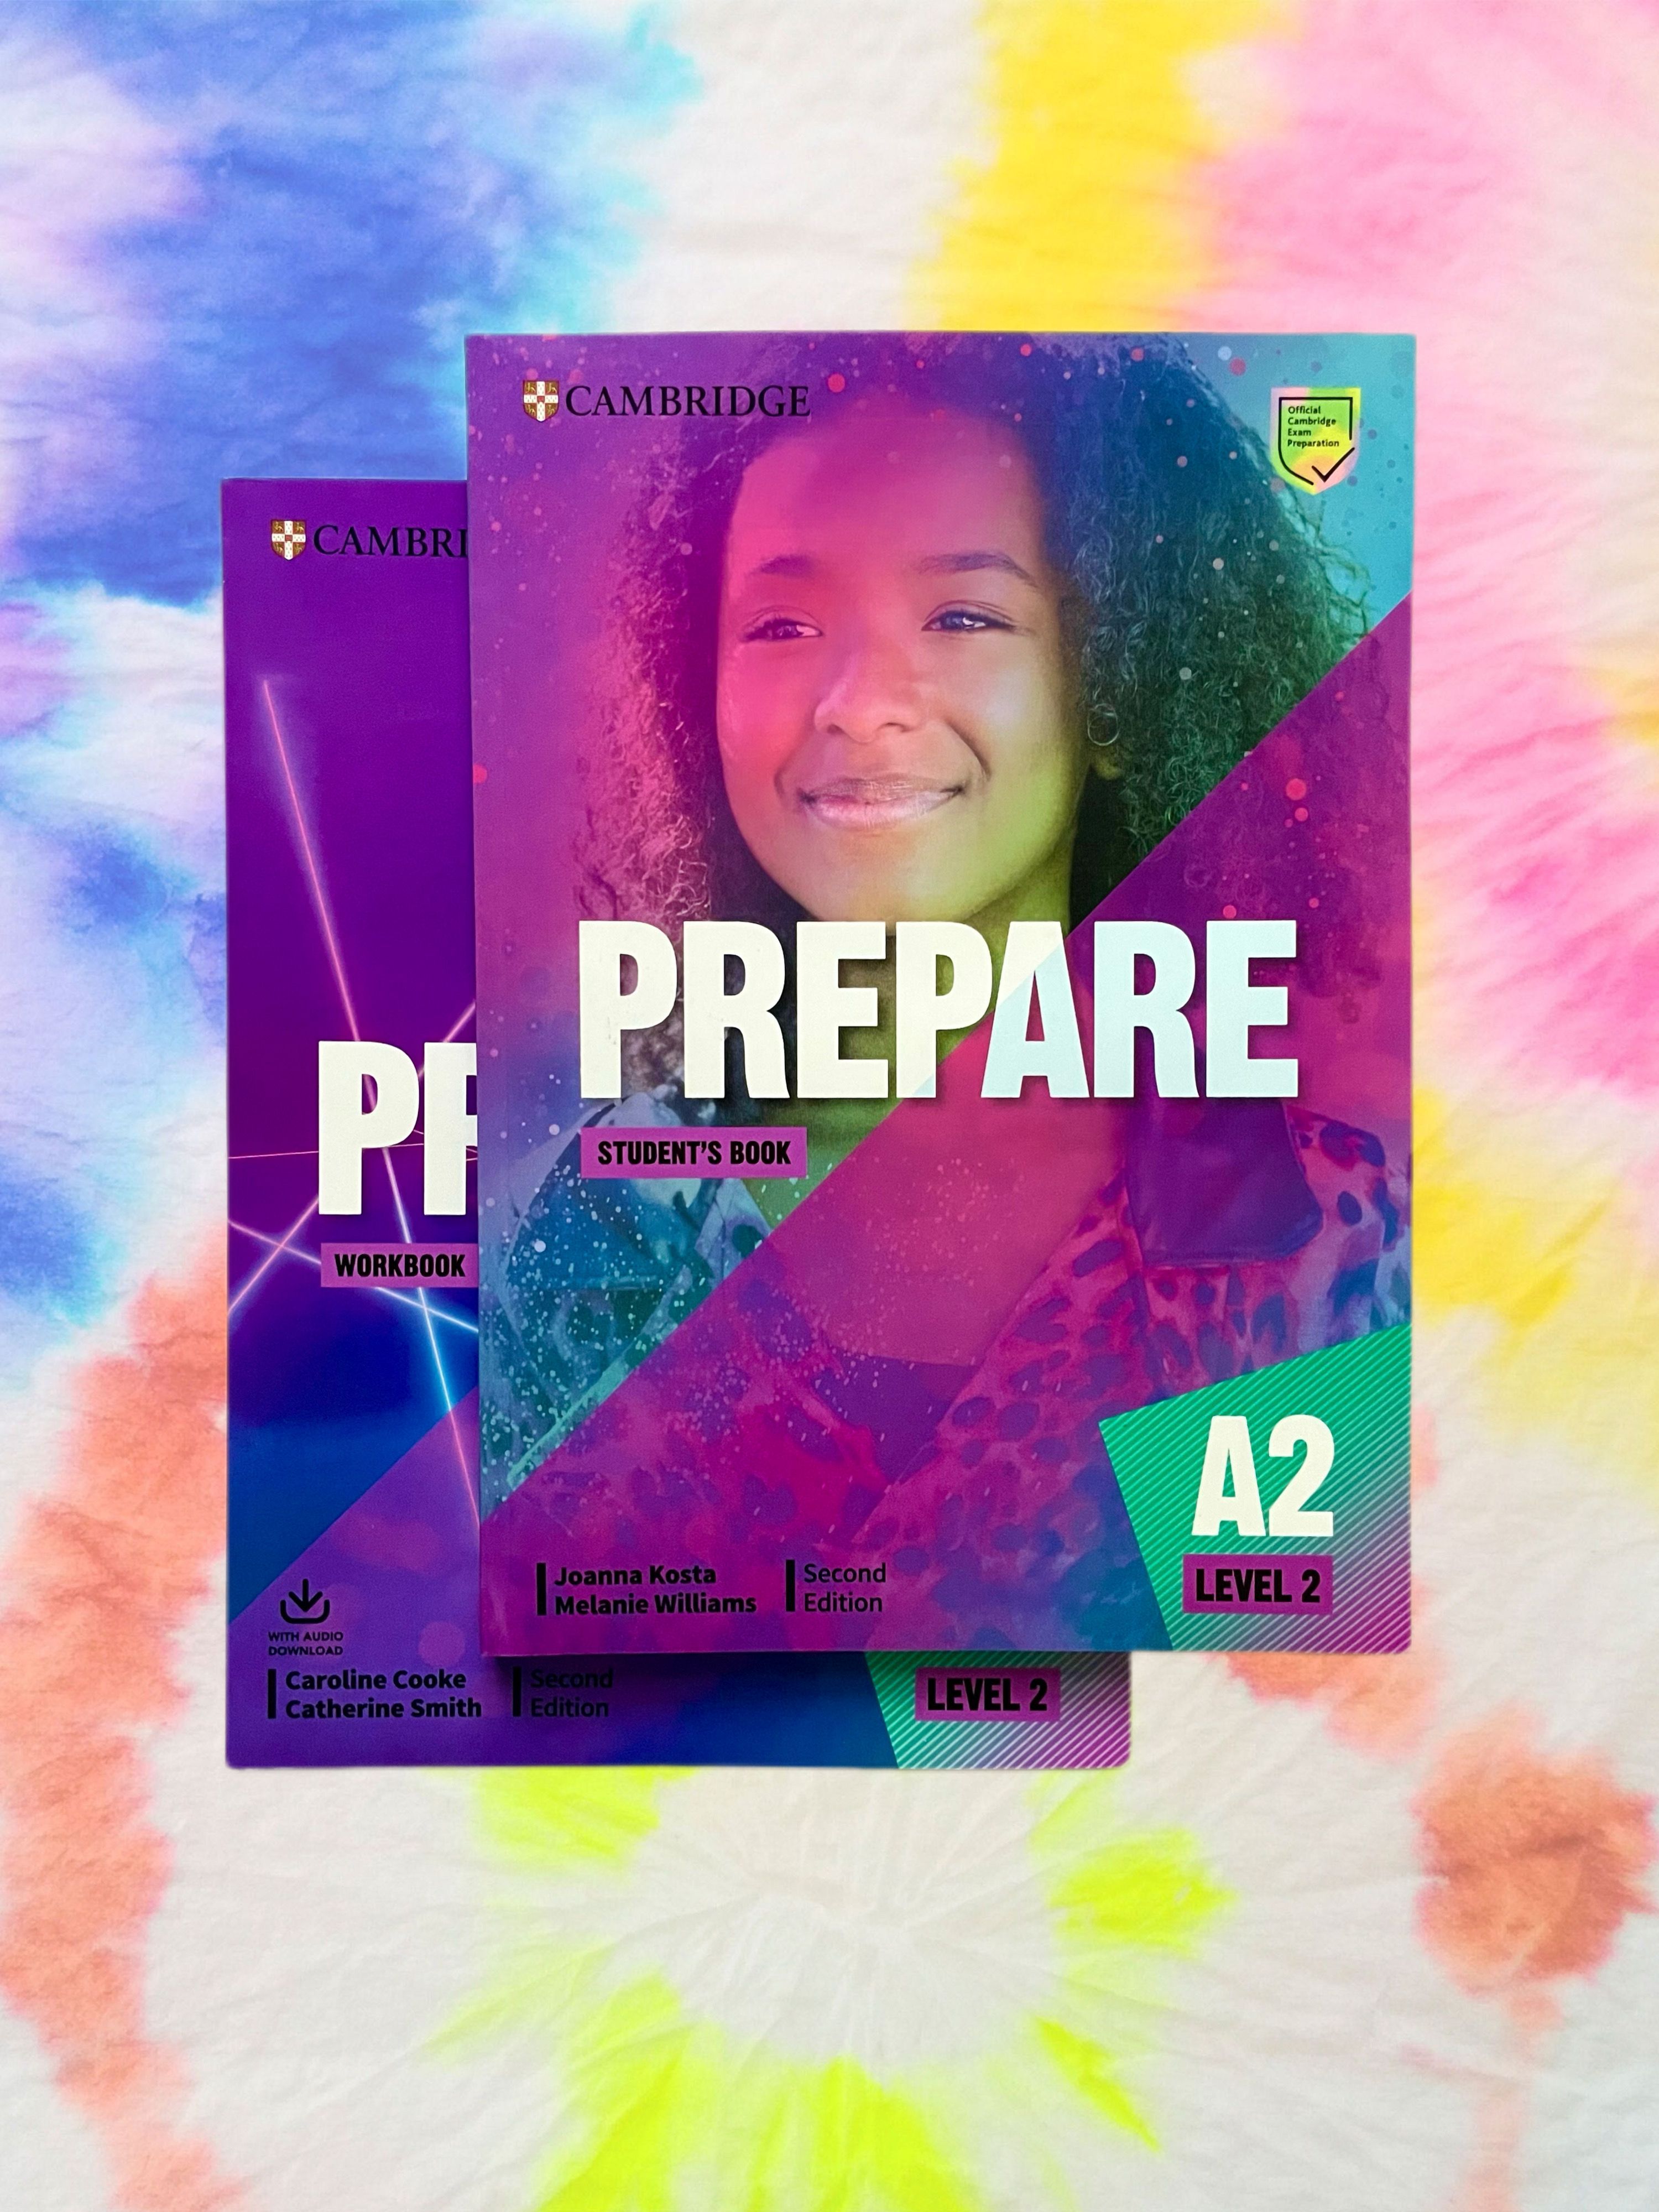 Учебник prepare. Prepare учебник. Prepare учебник английского. Interactive учебник. Prepare Level 2.